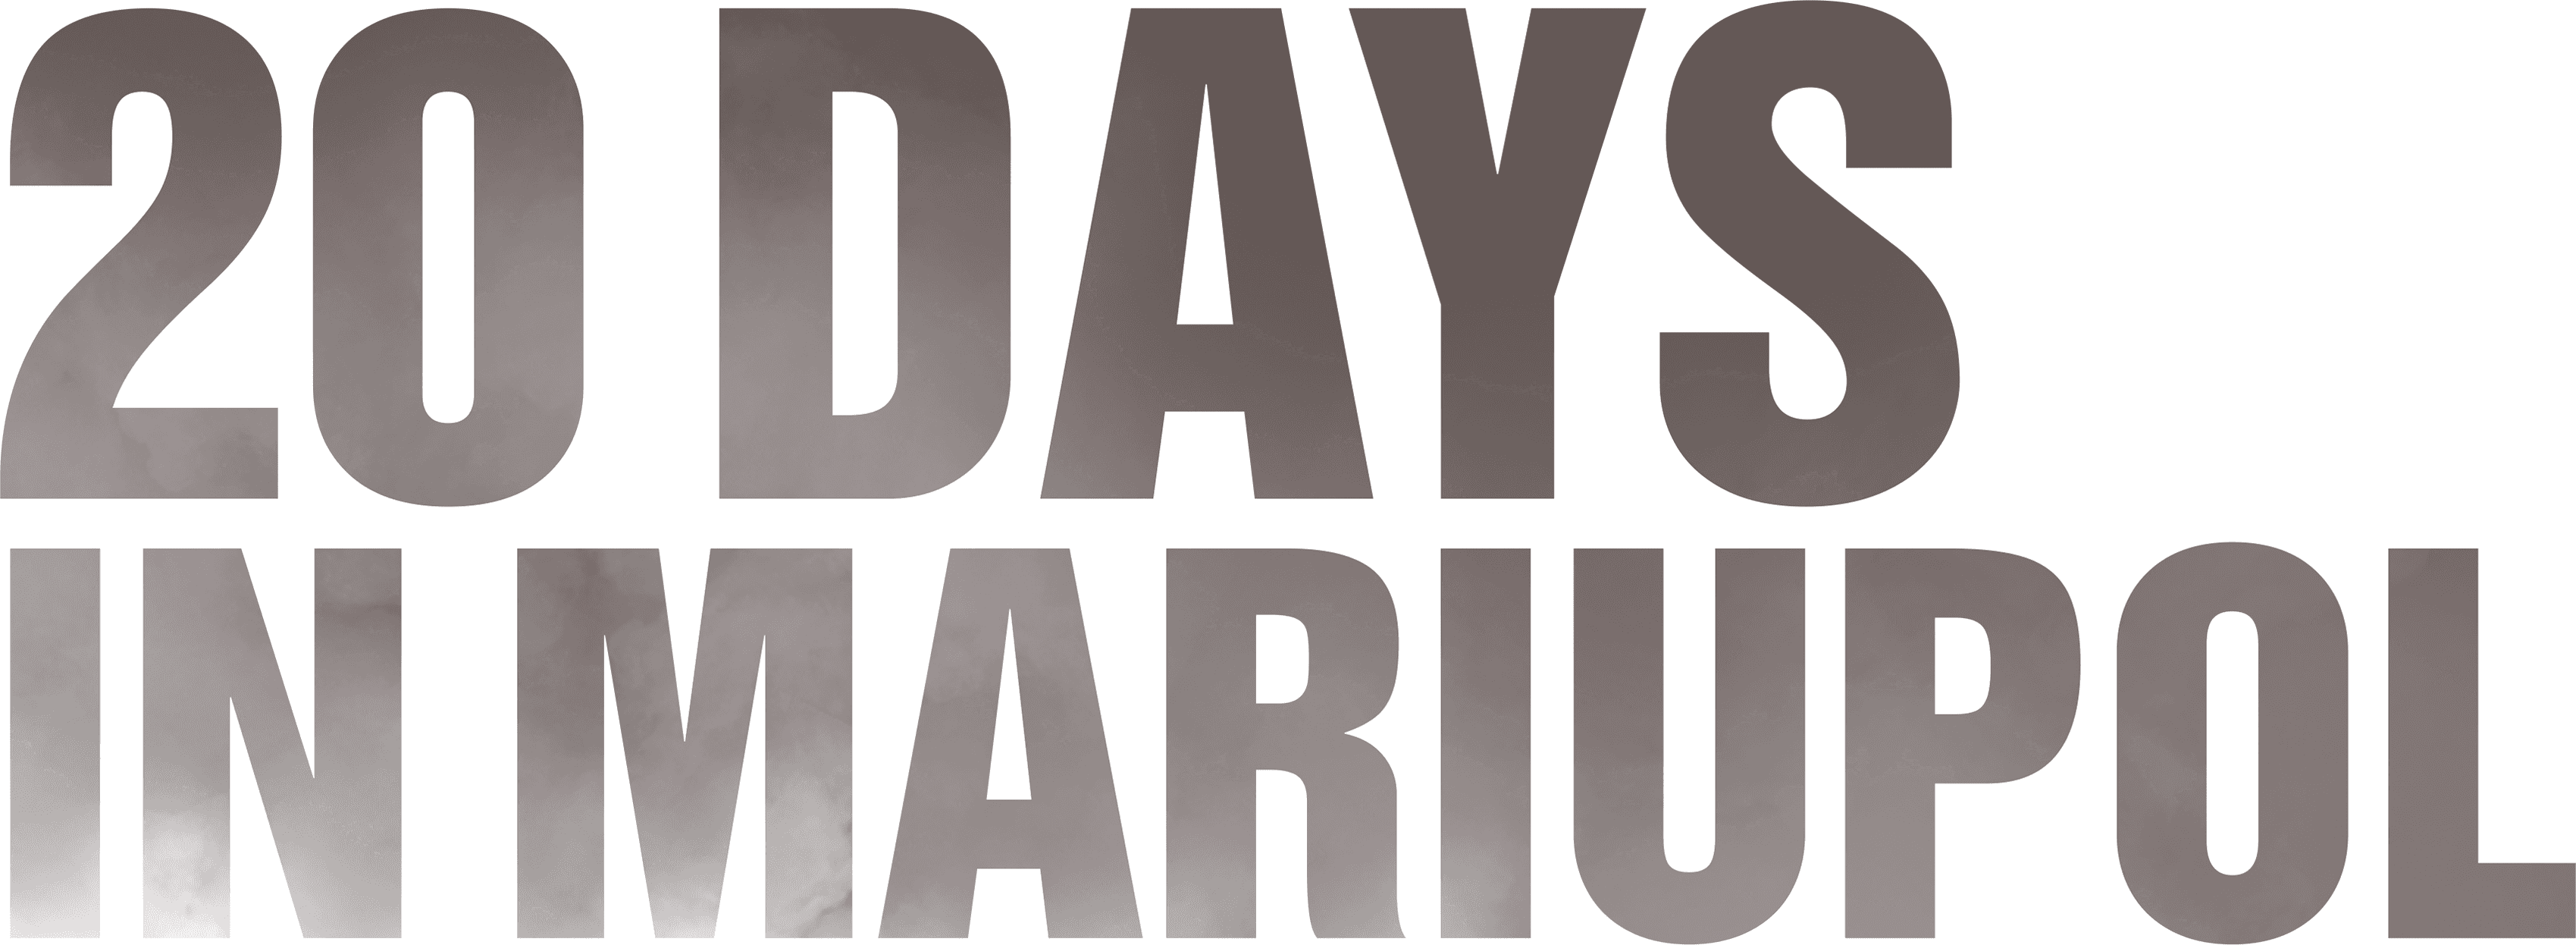 20 Days in Mariupol logo